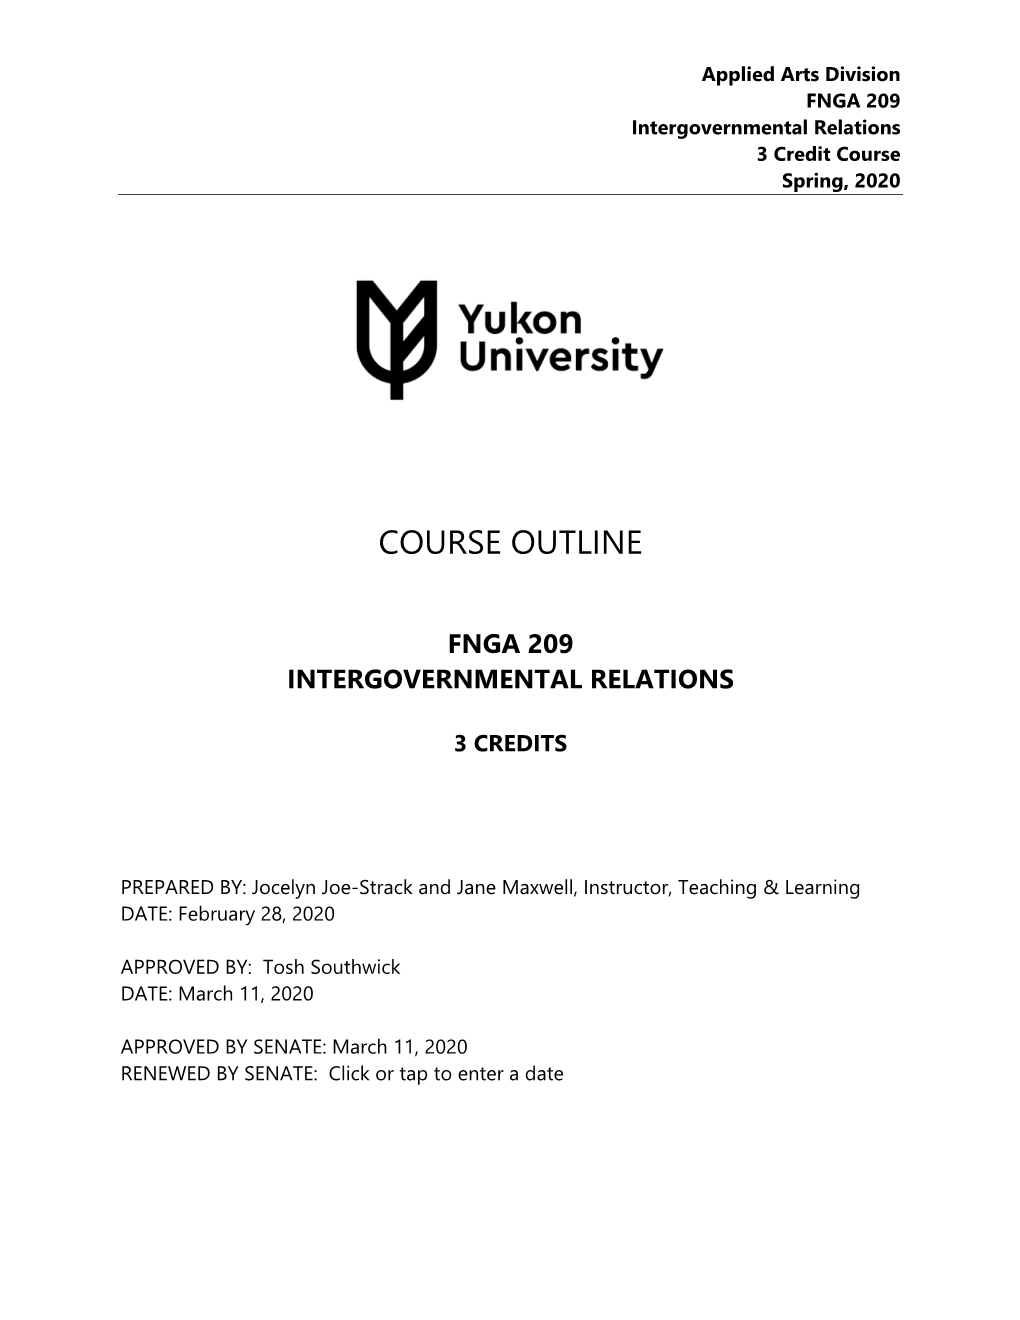 Yukonu FNGA 209 Course Outline.Pdf